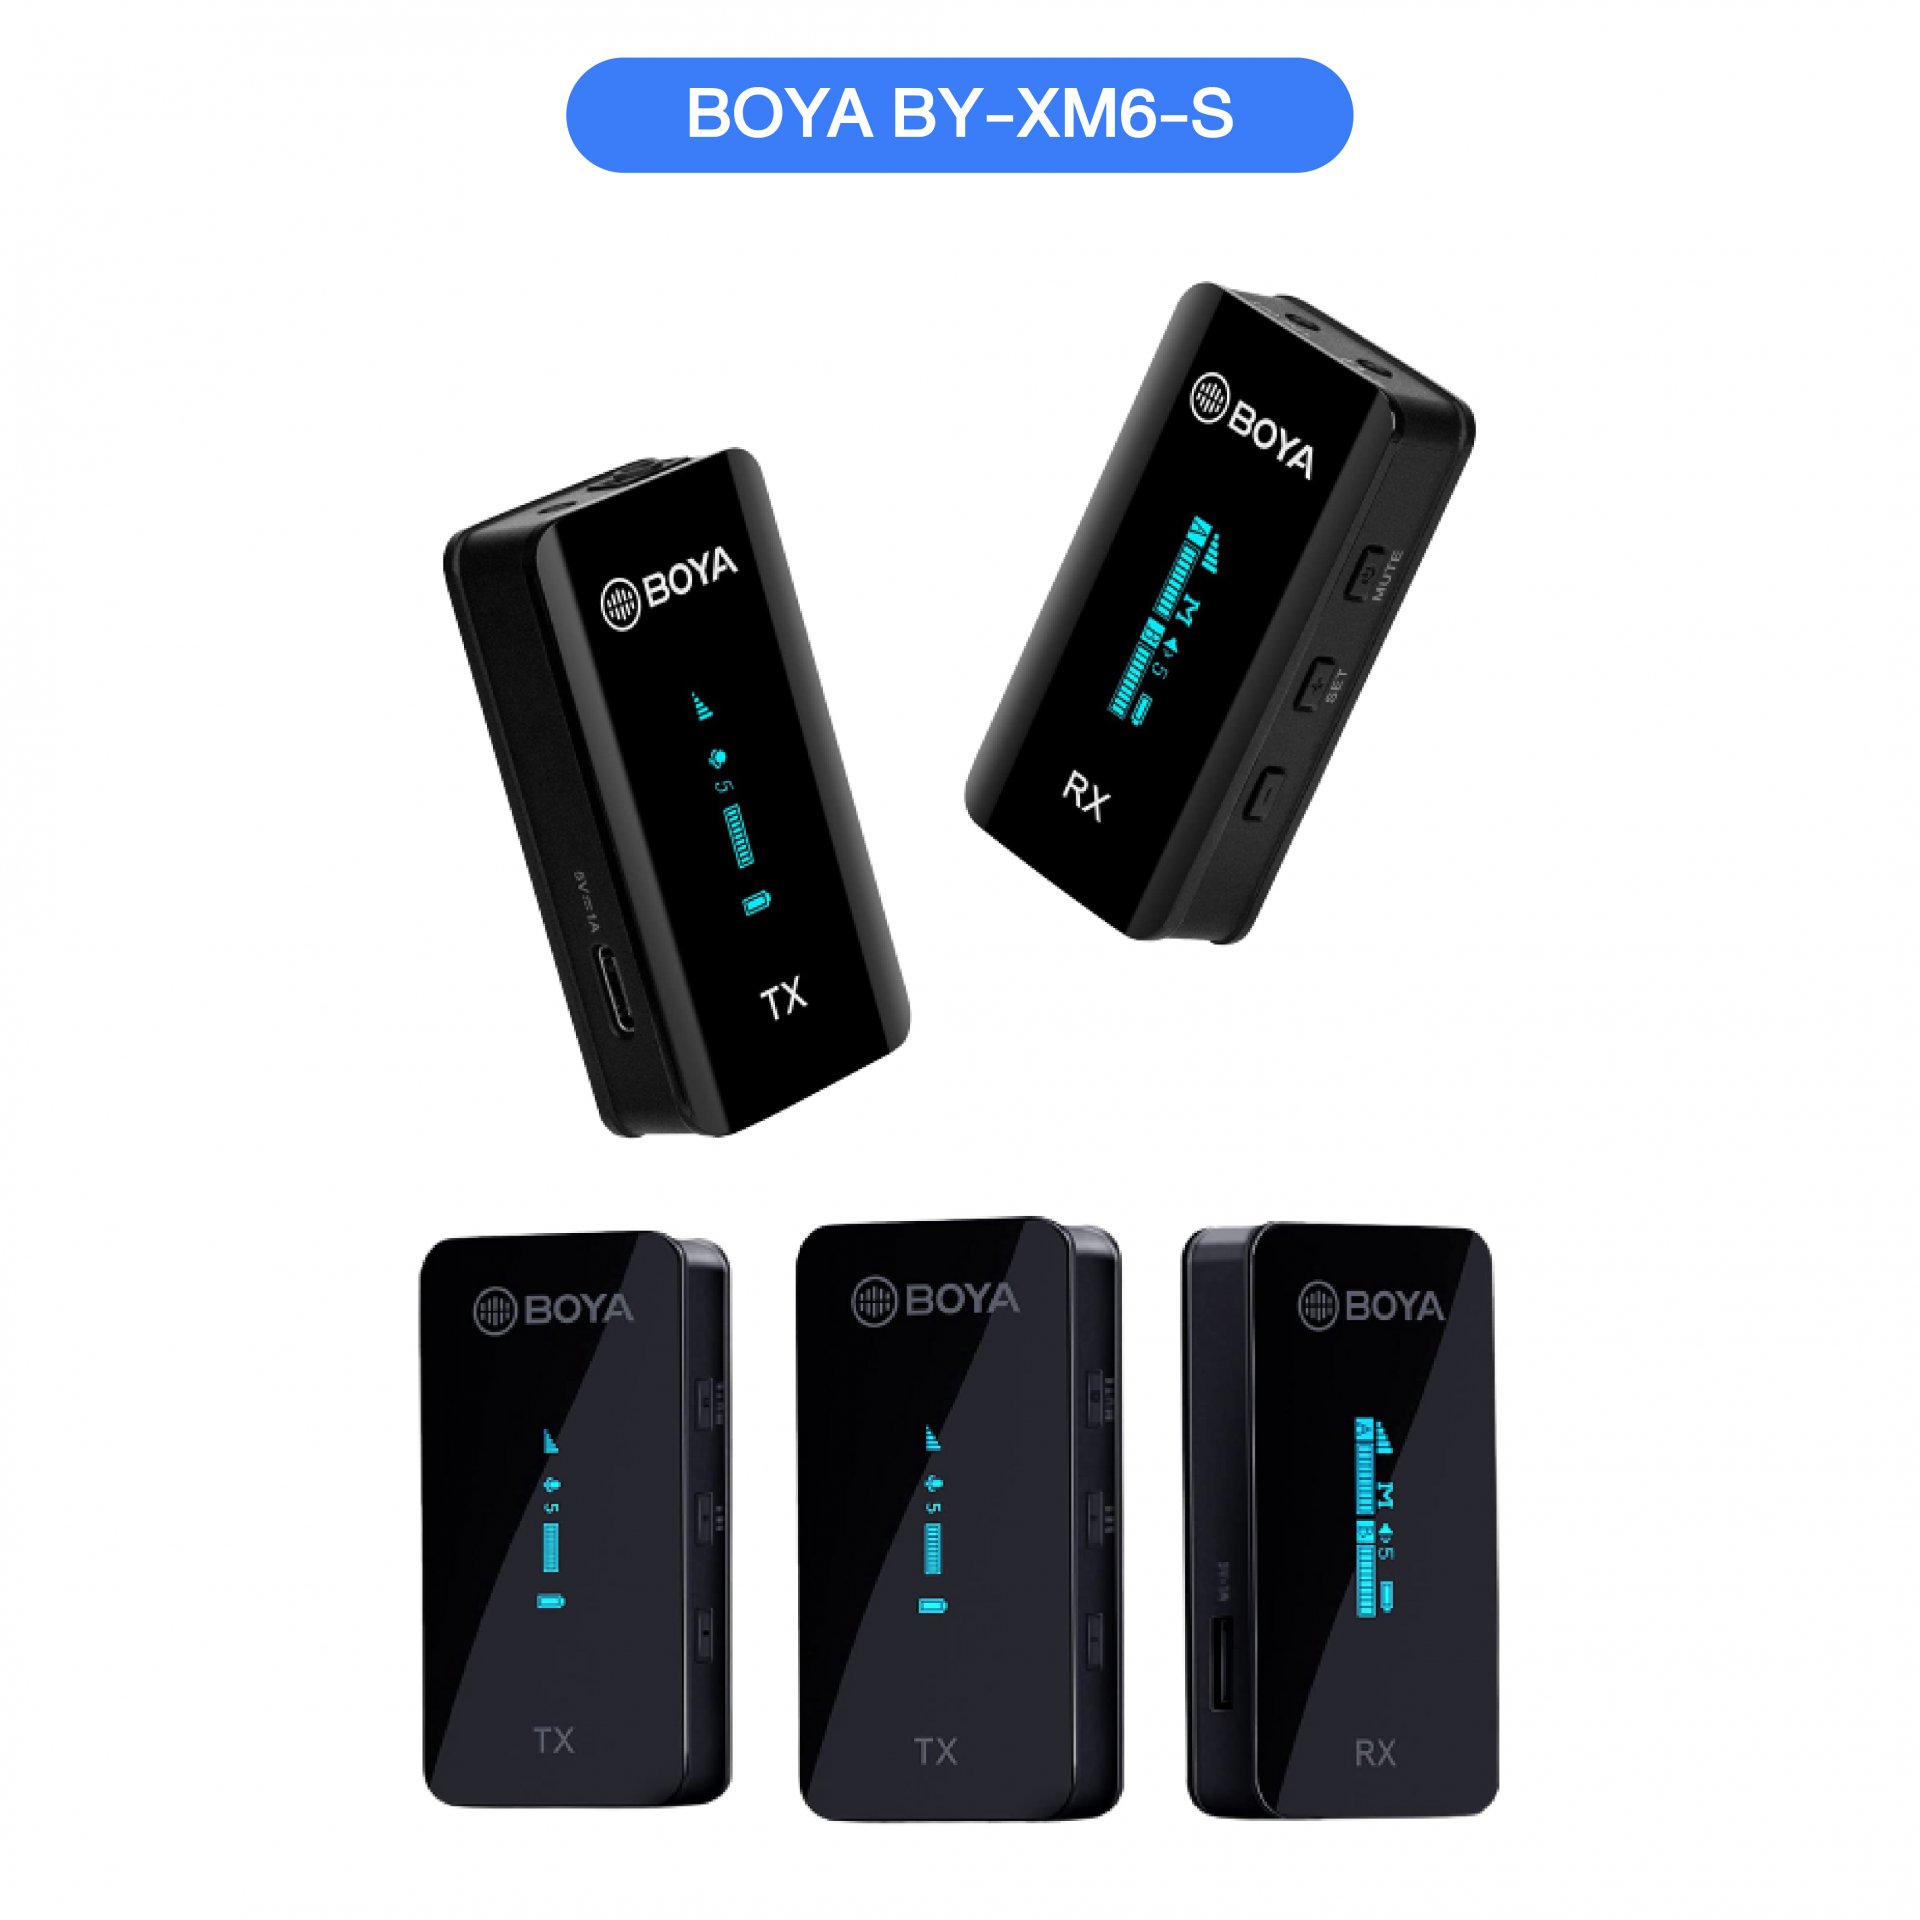 BOYA BY-XM6-S 2.4GHz Ultra-compact Wireless Microphone